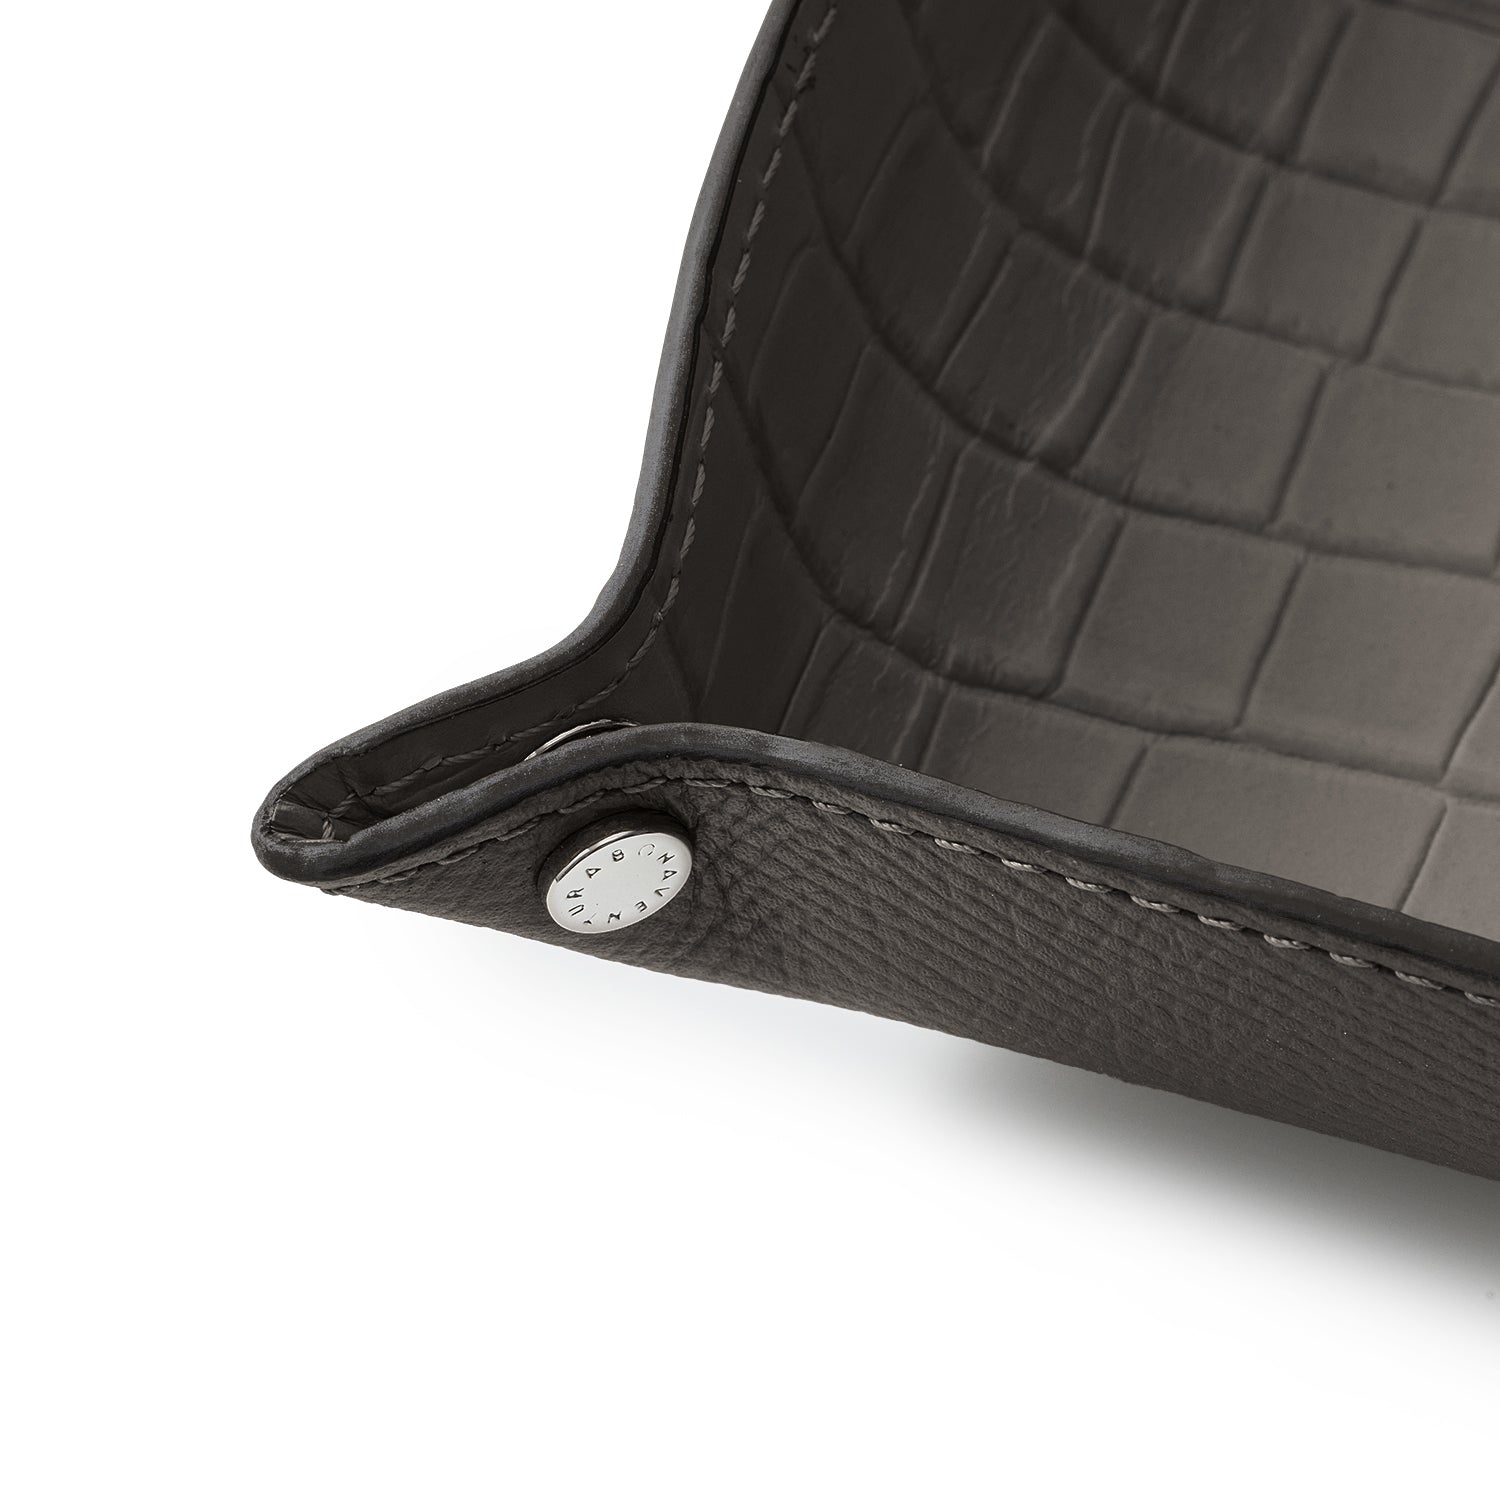 Noblesse valet tray in embossed crocodile leather (medium)